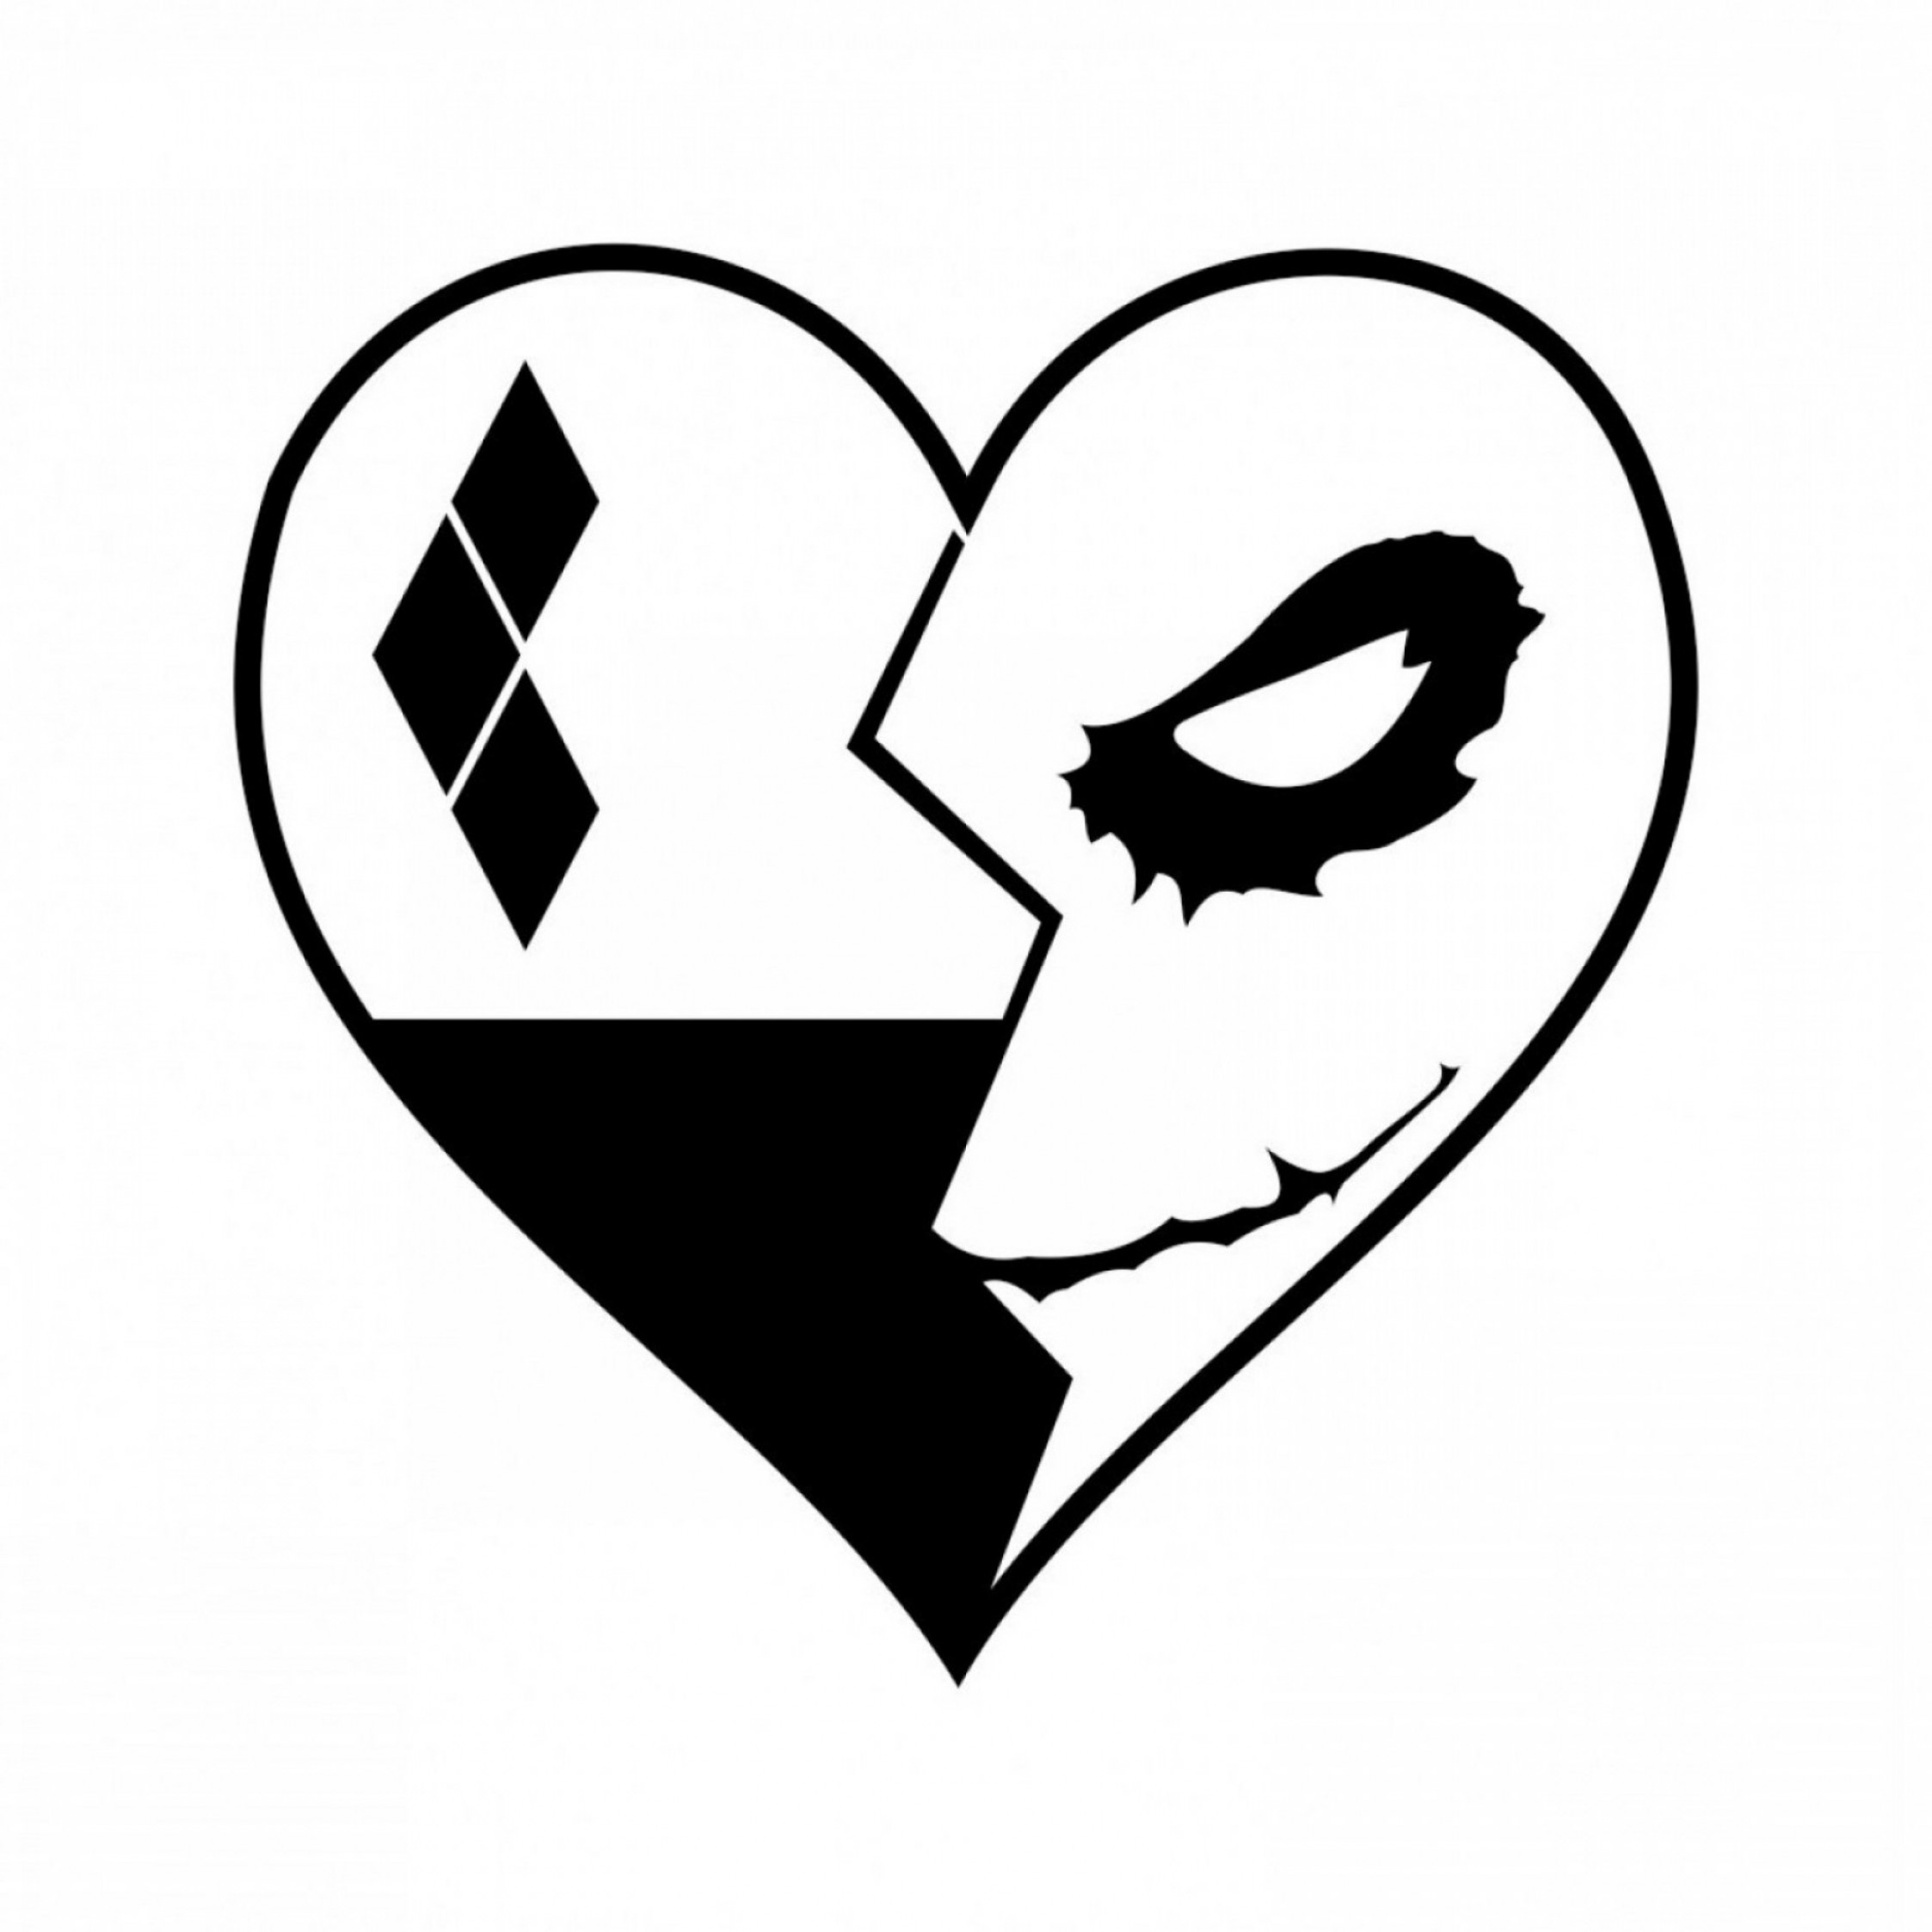 Joker And Harley Quinn Heart Graphics Design Svg Dxf Eps Png.